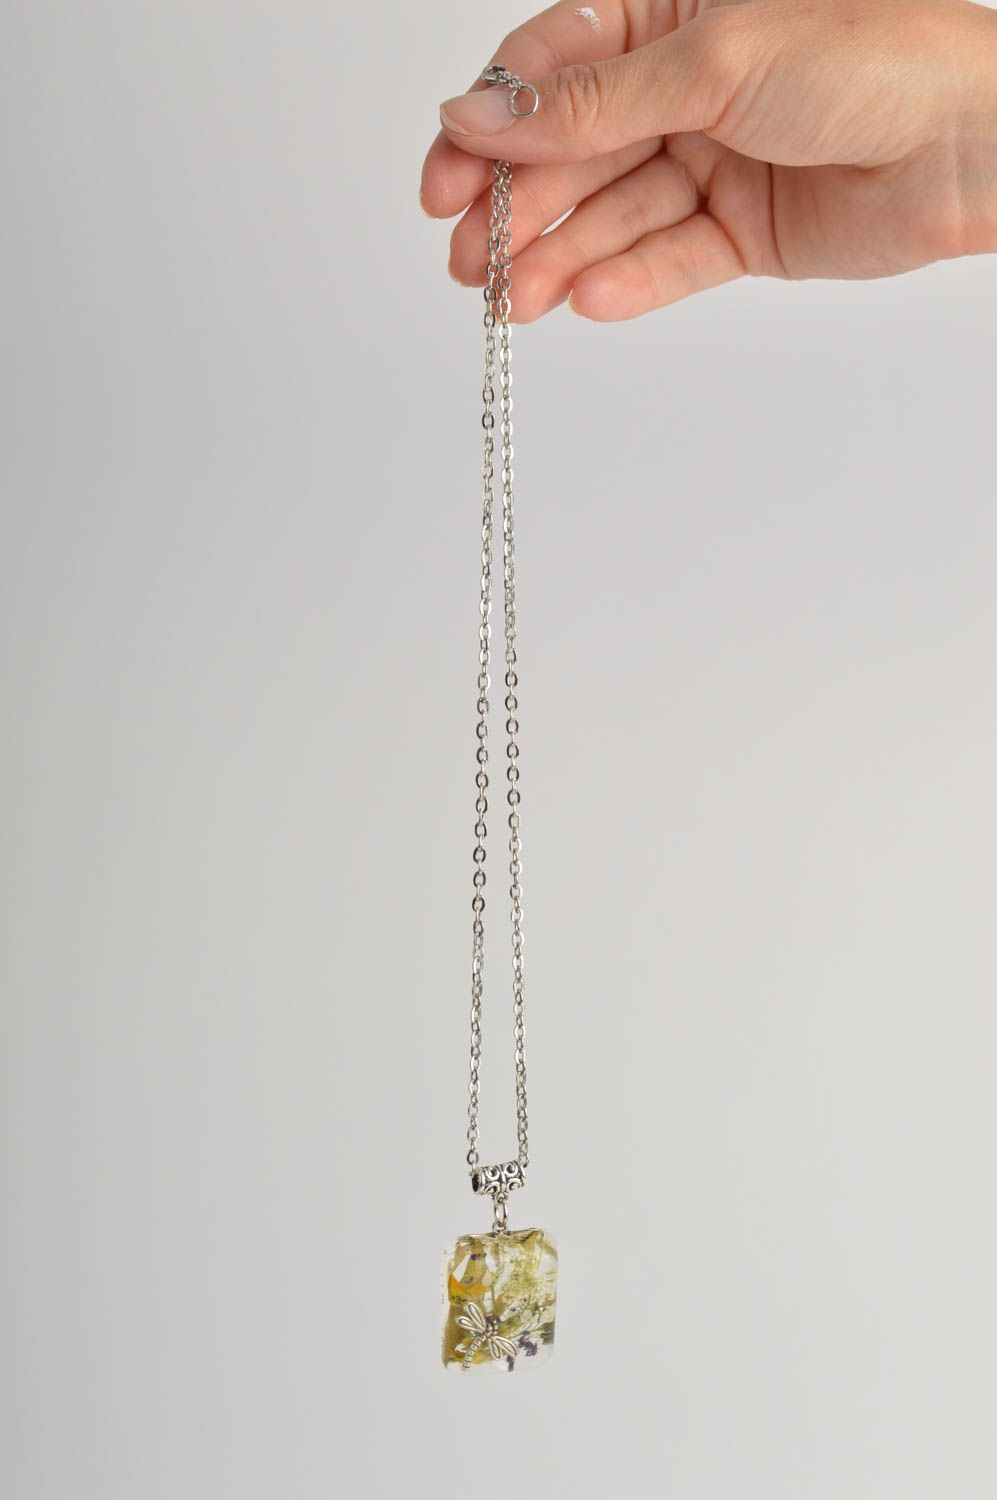 Handmade pendant unusual pendant designer accessory gift ideas resin jewelry photo 5